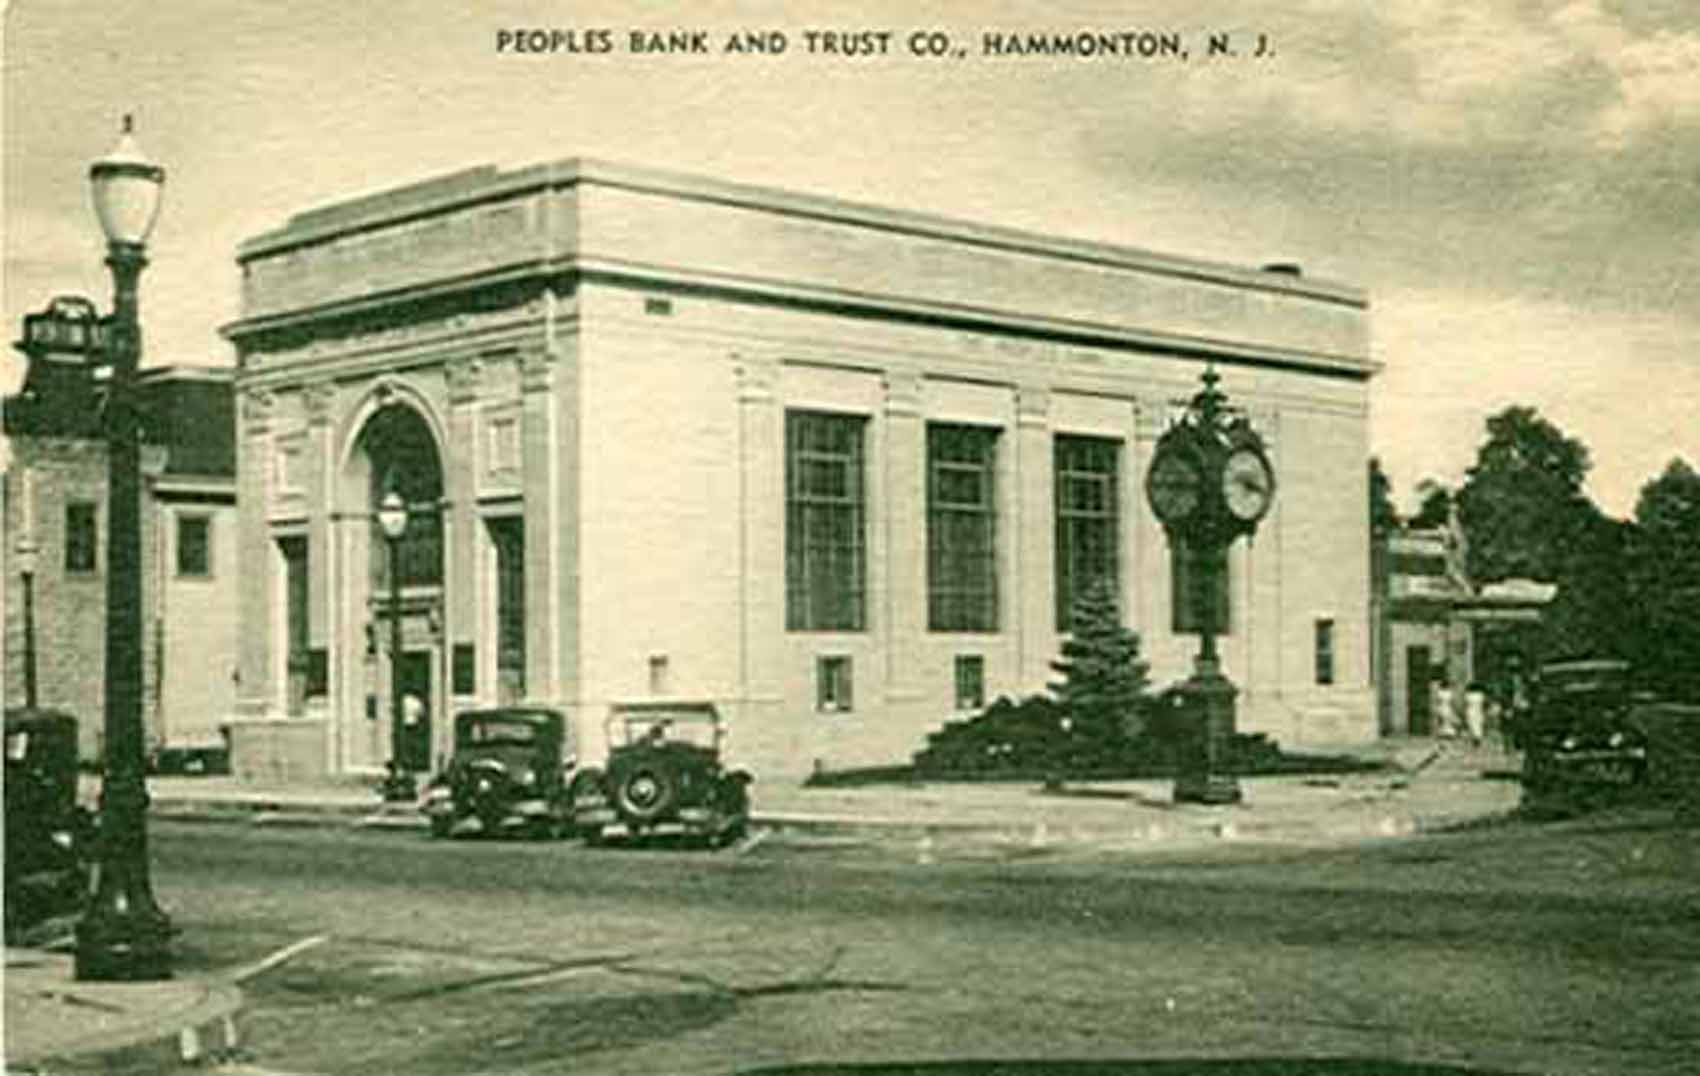 Hammonton - Peoples Bank and Trust